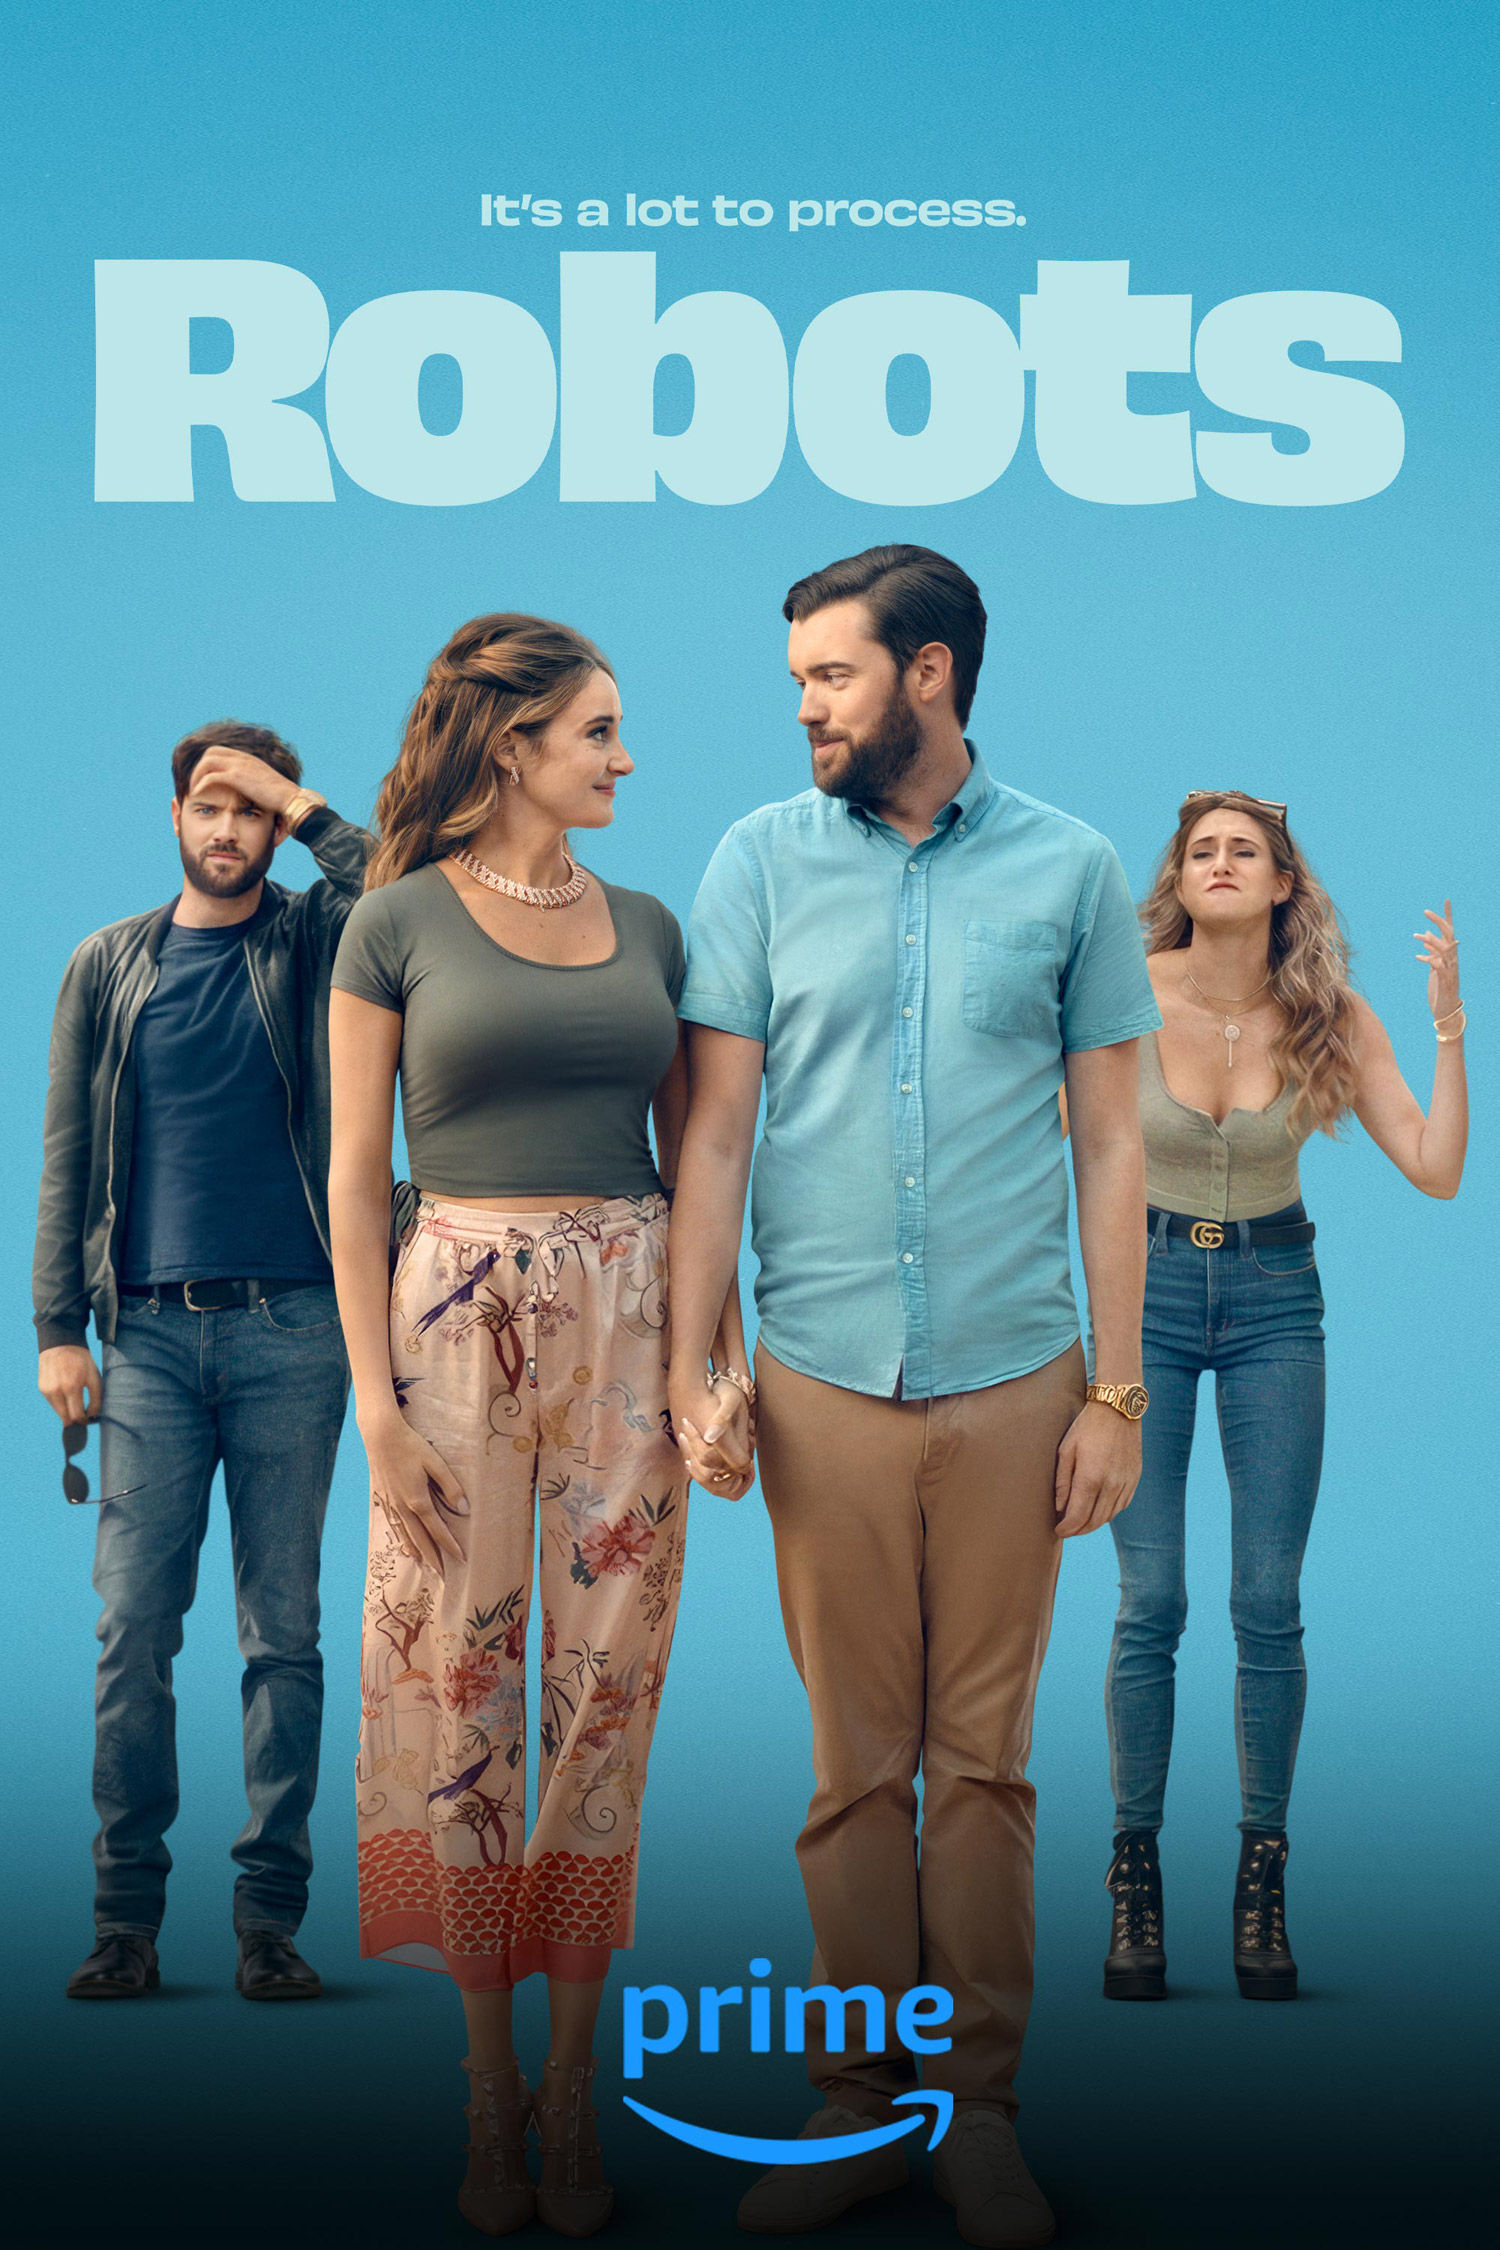 Robots (2023) Film 2023 MovieTele.it